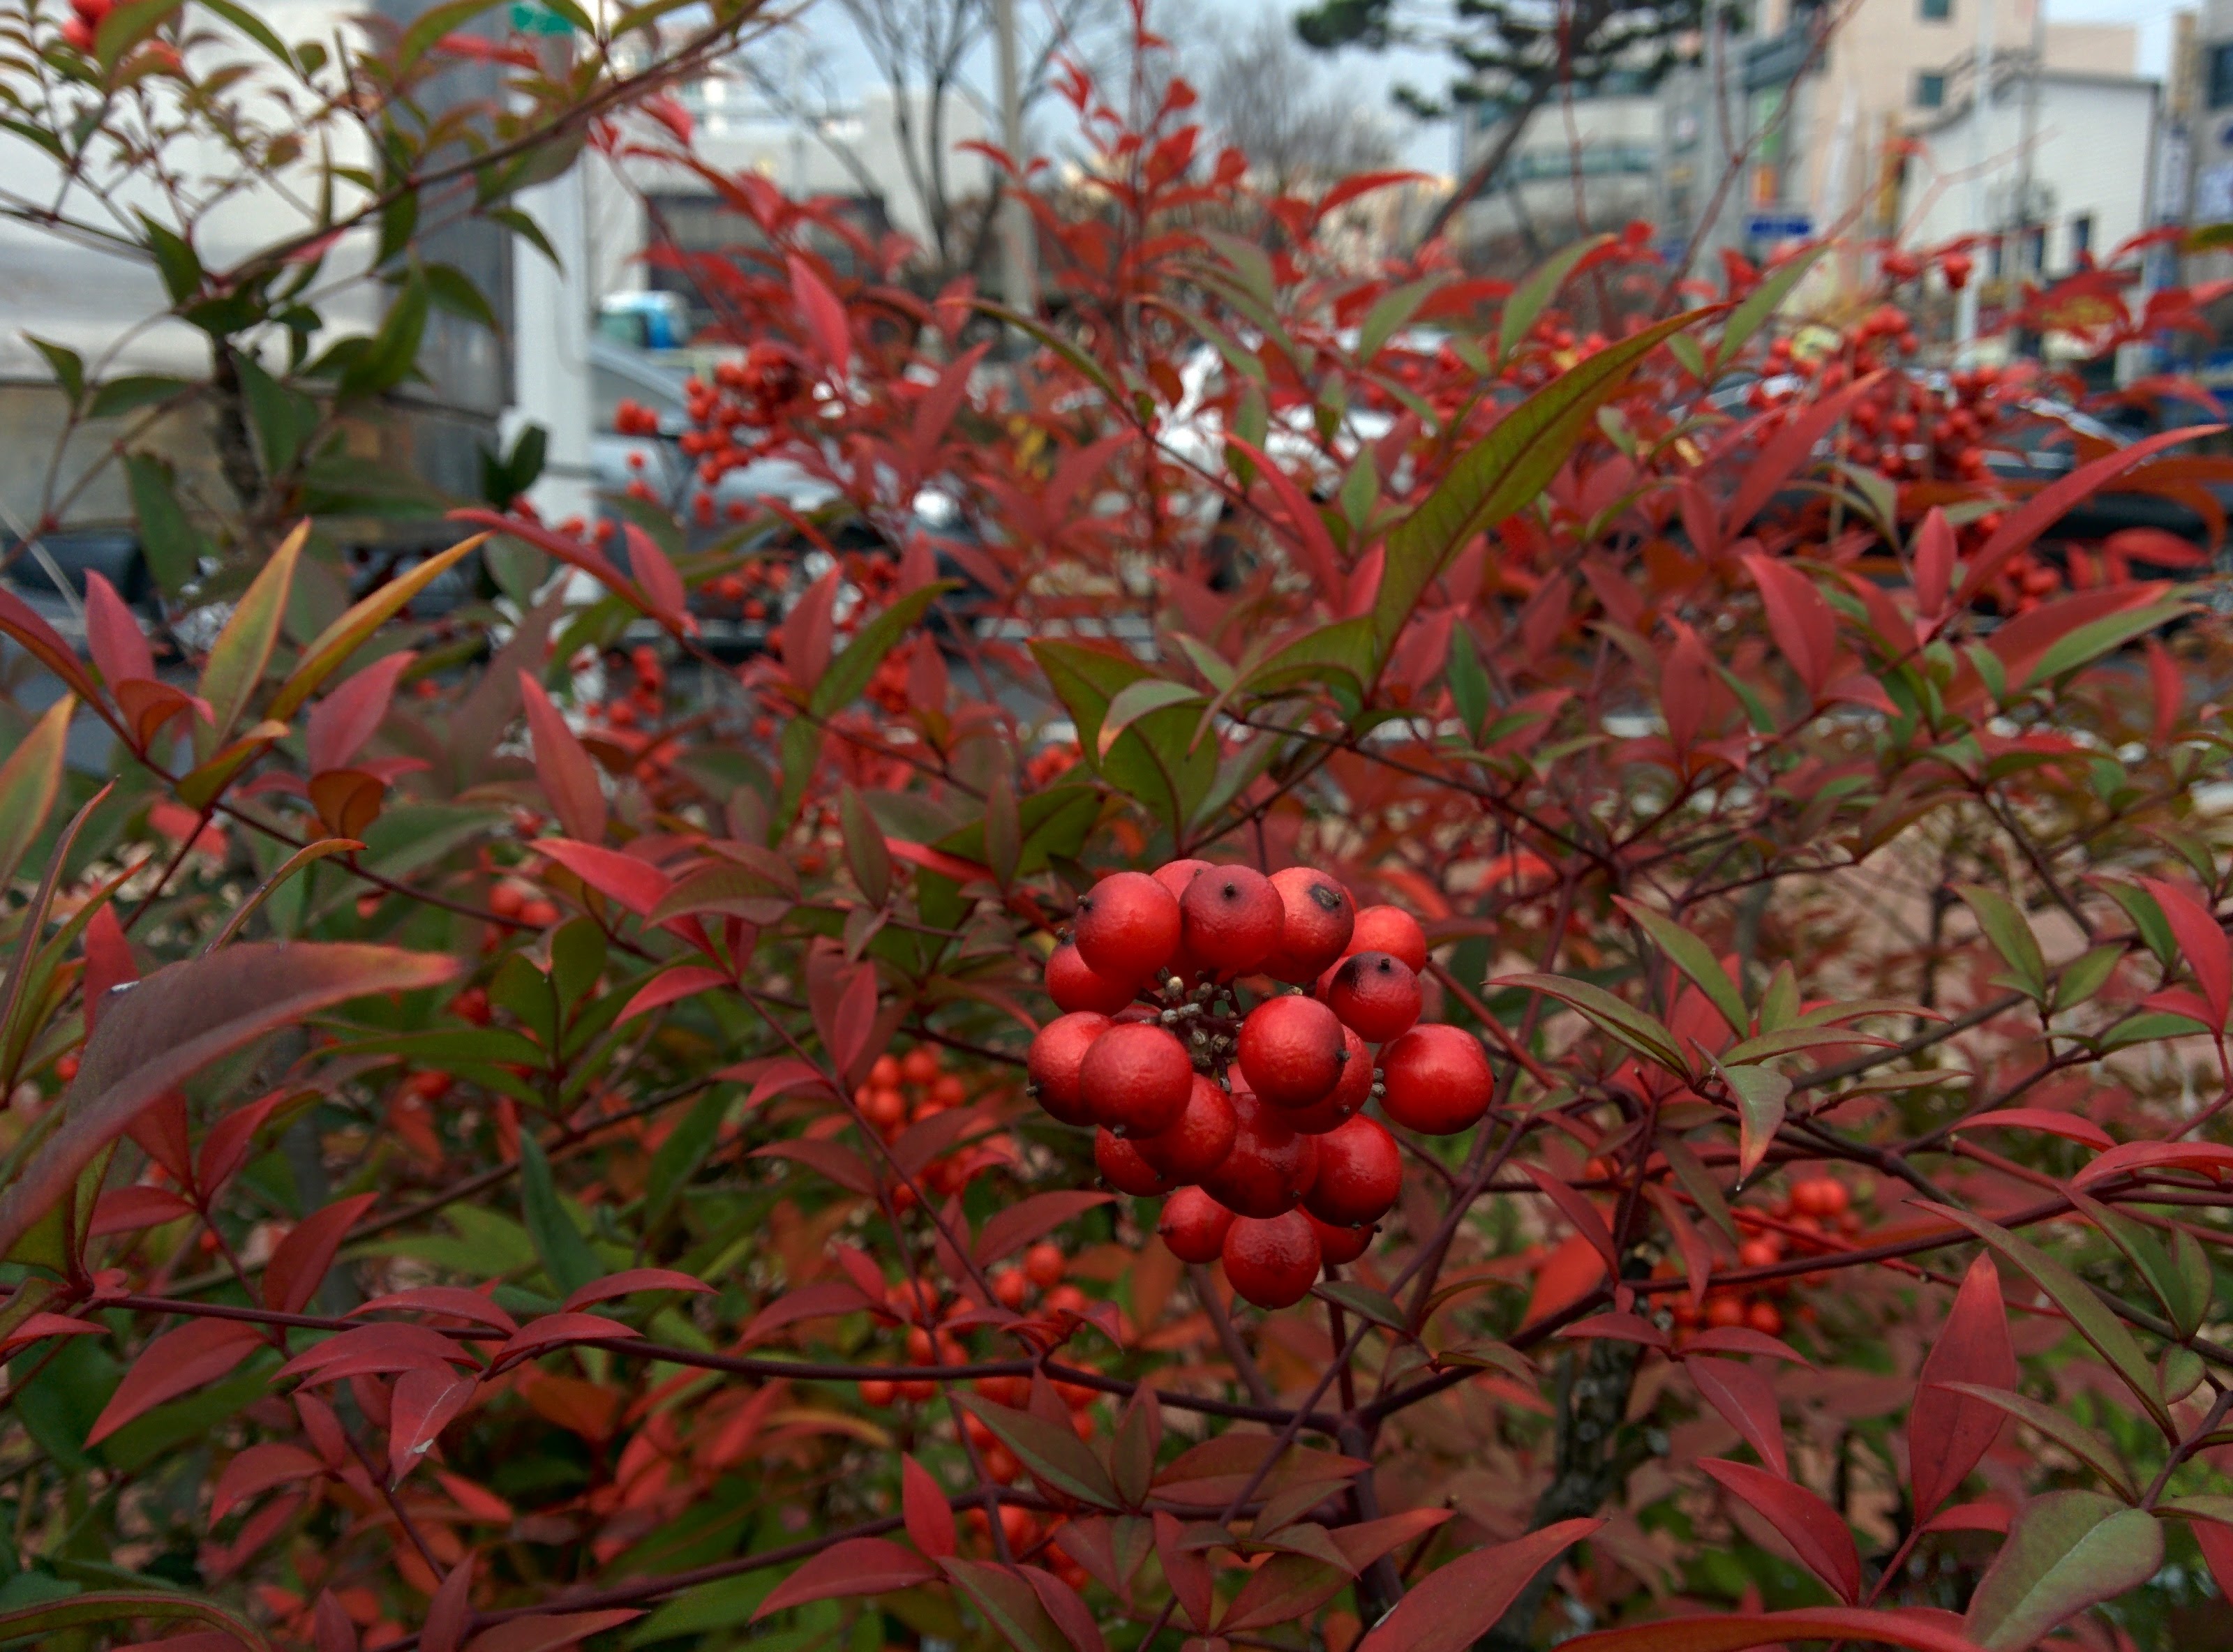 IMG_20151130_105303.jpg 가로변에 붉게 익어가는 남천나무 열매